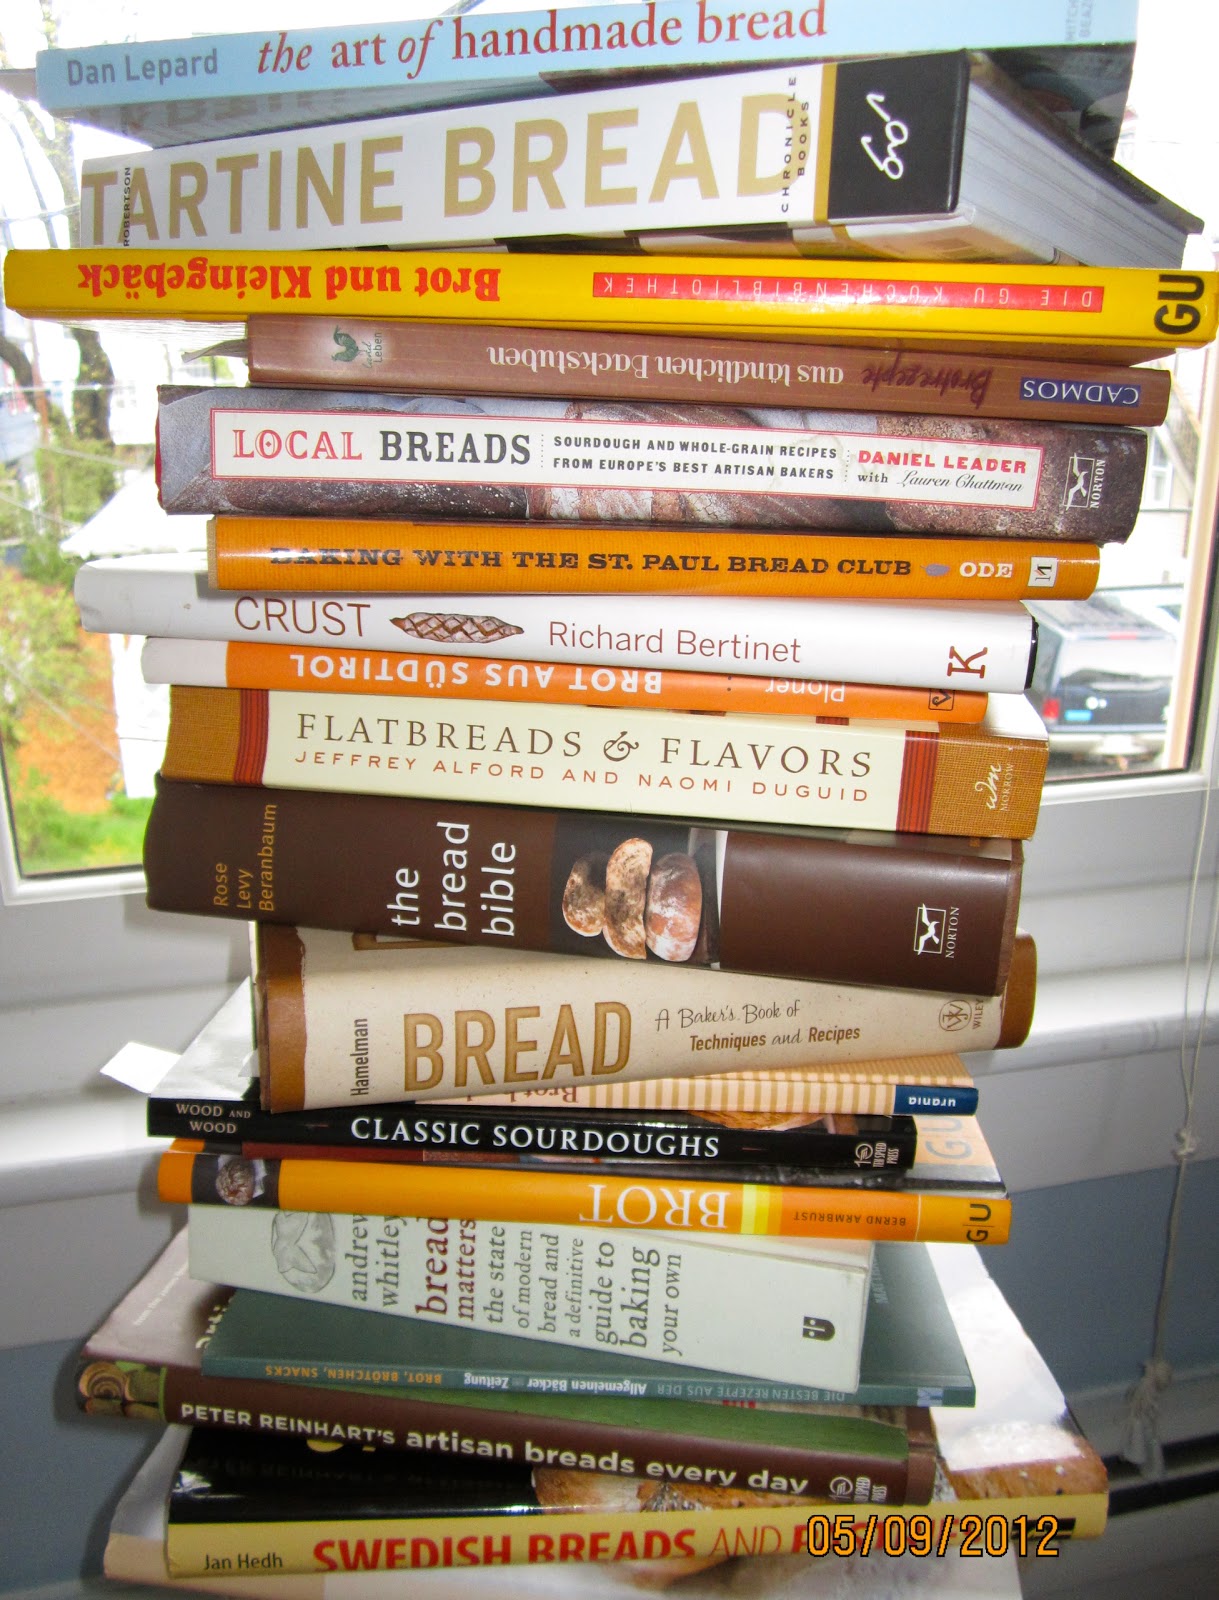 baking books